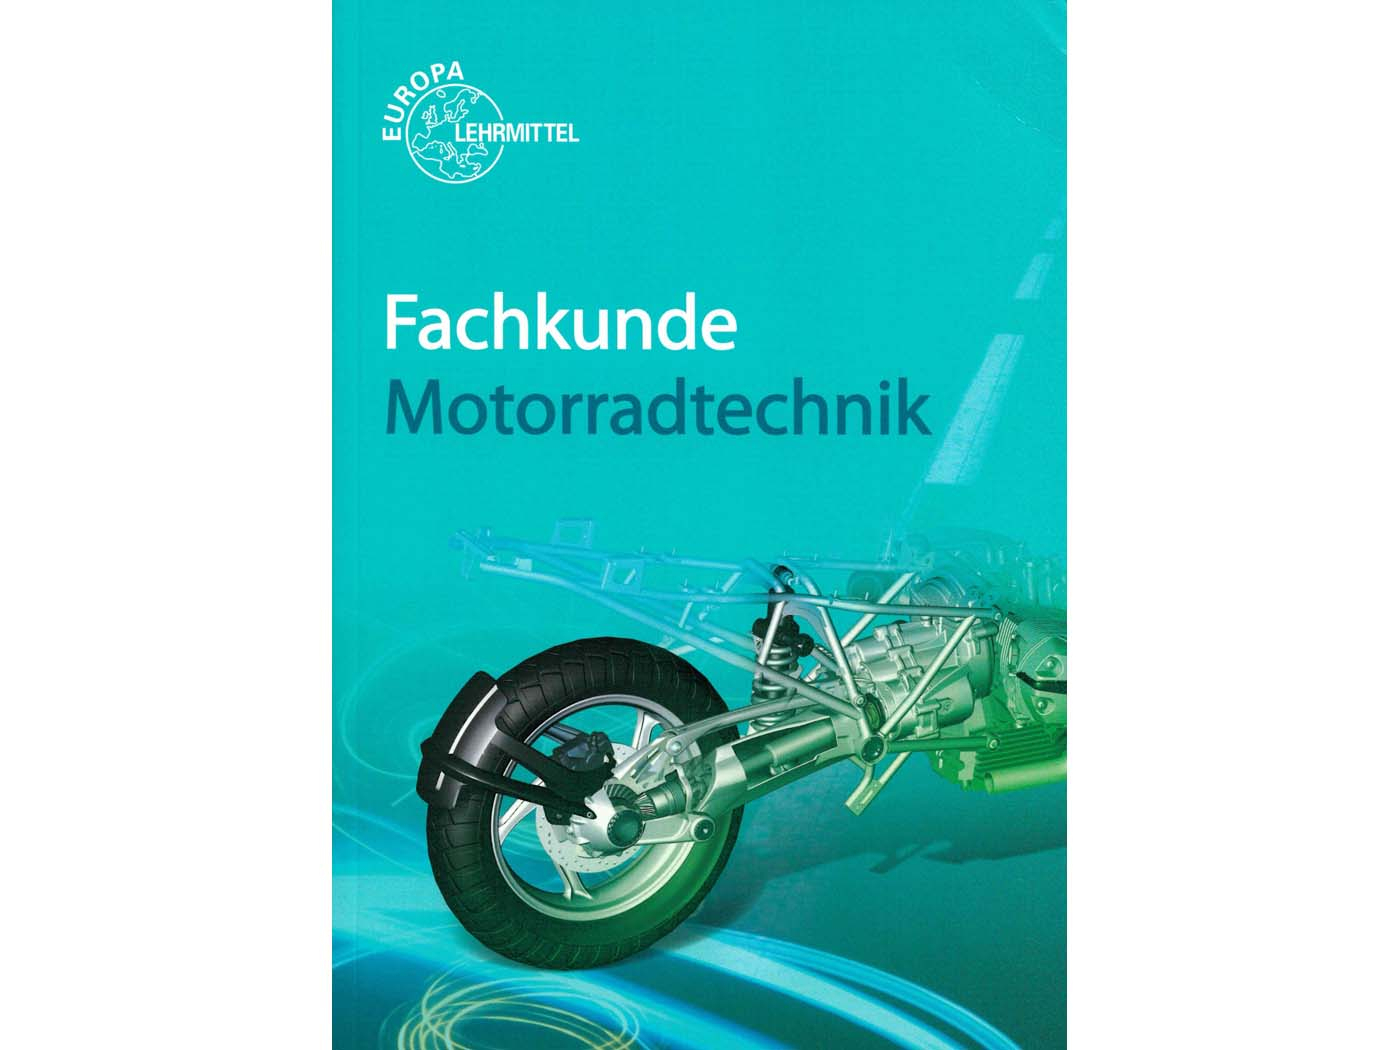 Zweirad Motor Mechaniker Schule Fachkunde Motortechnik Fachbuch